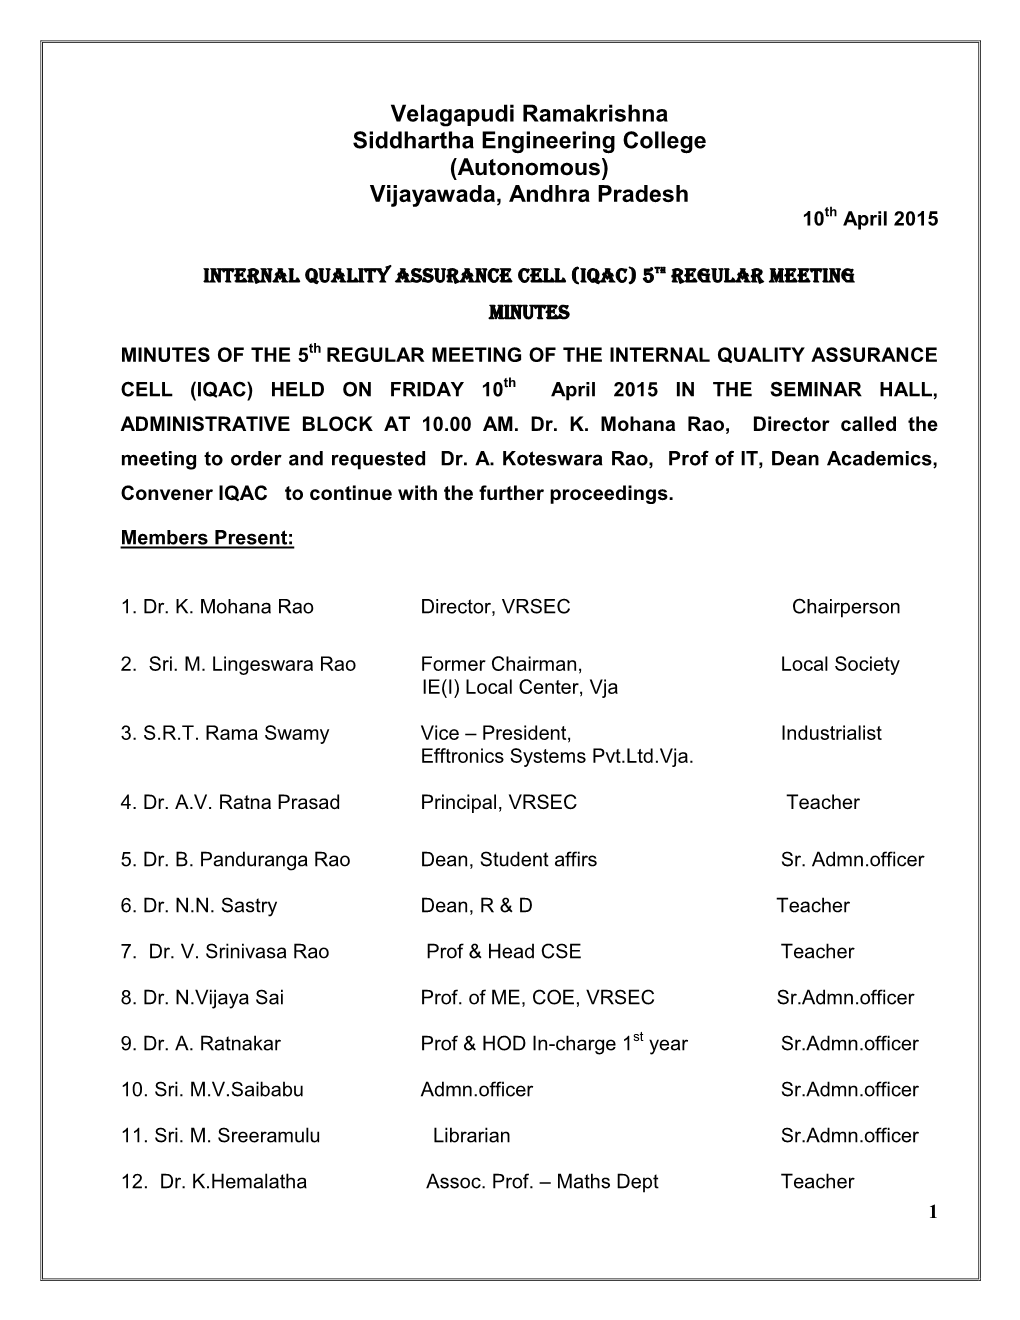 Velagapudi Ramakrishna Siddhartha Engineering College (Autonomous) Vijayawada, Andhra Pradesh 10Th April 2015